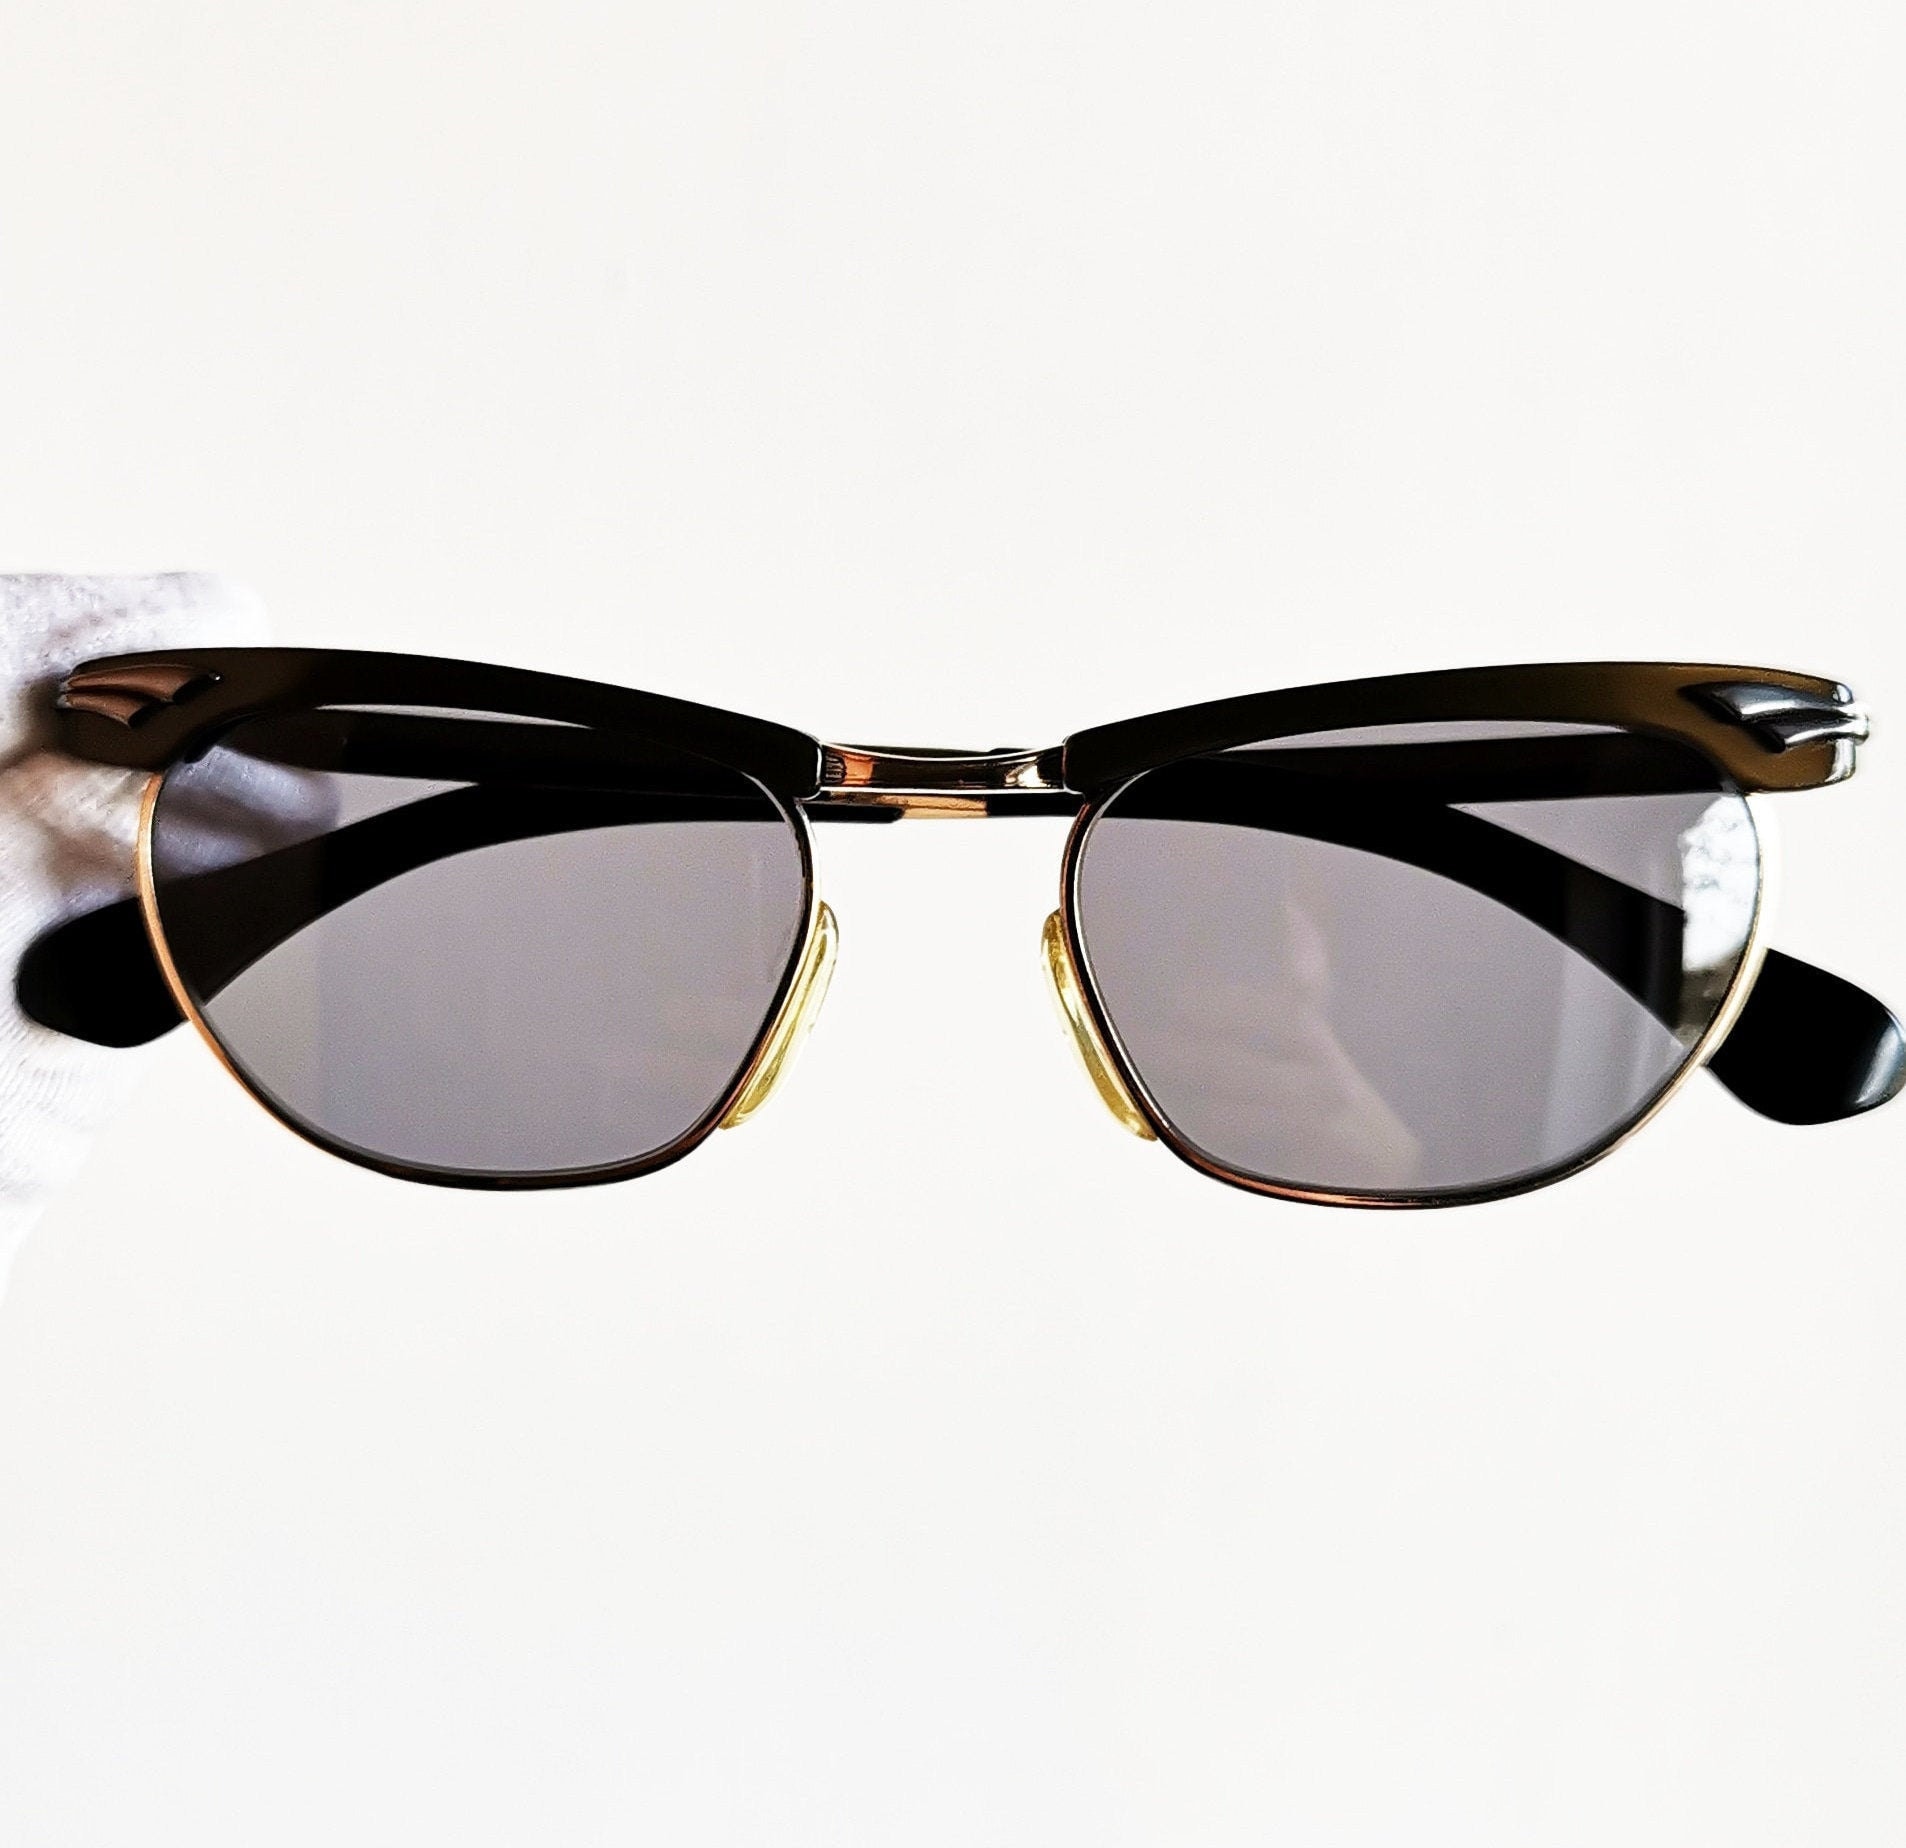 Louis Vuitton Lily Strass Sunglasses - Metallic Sunglasses